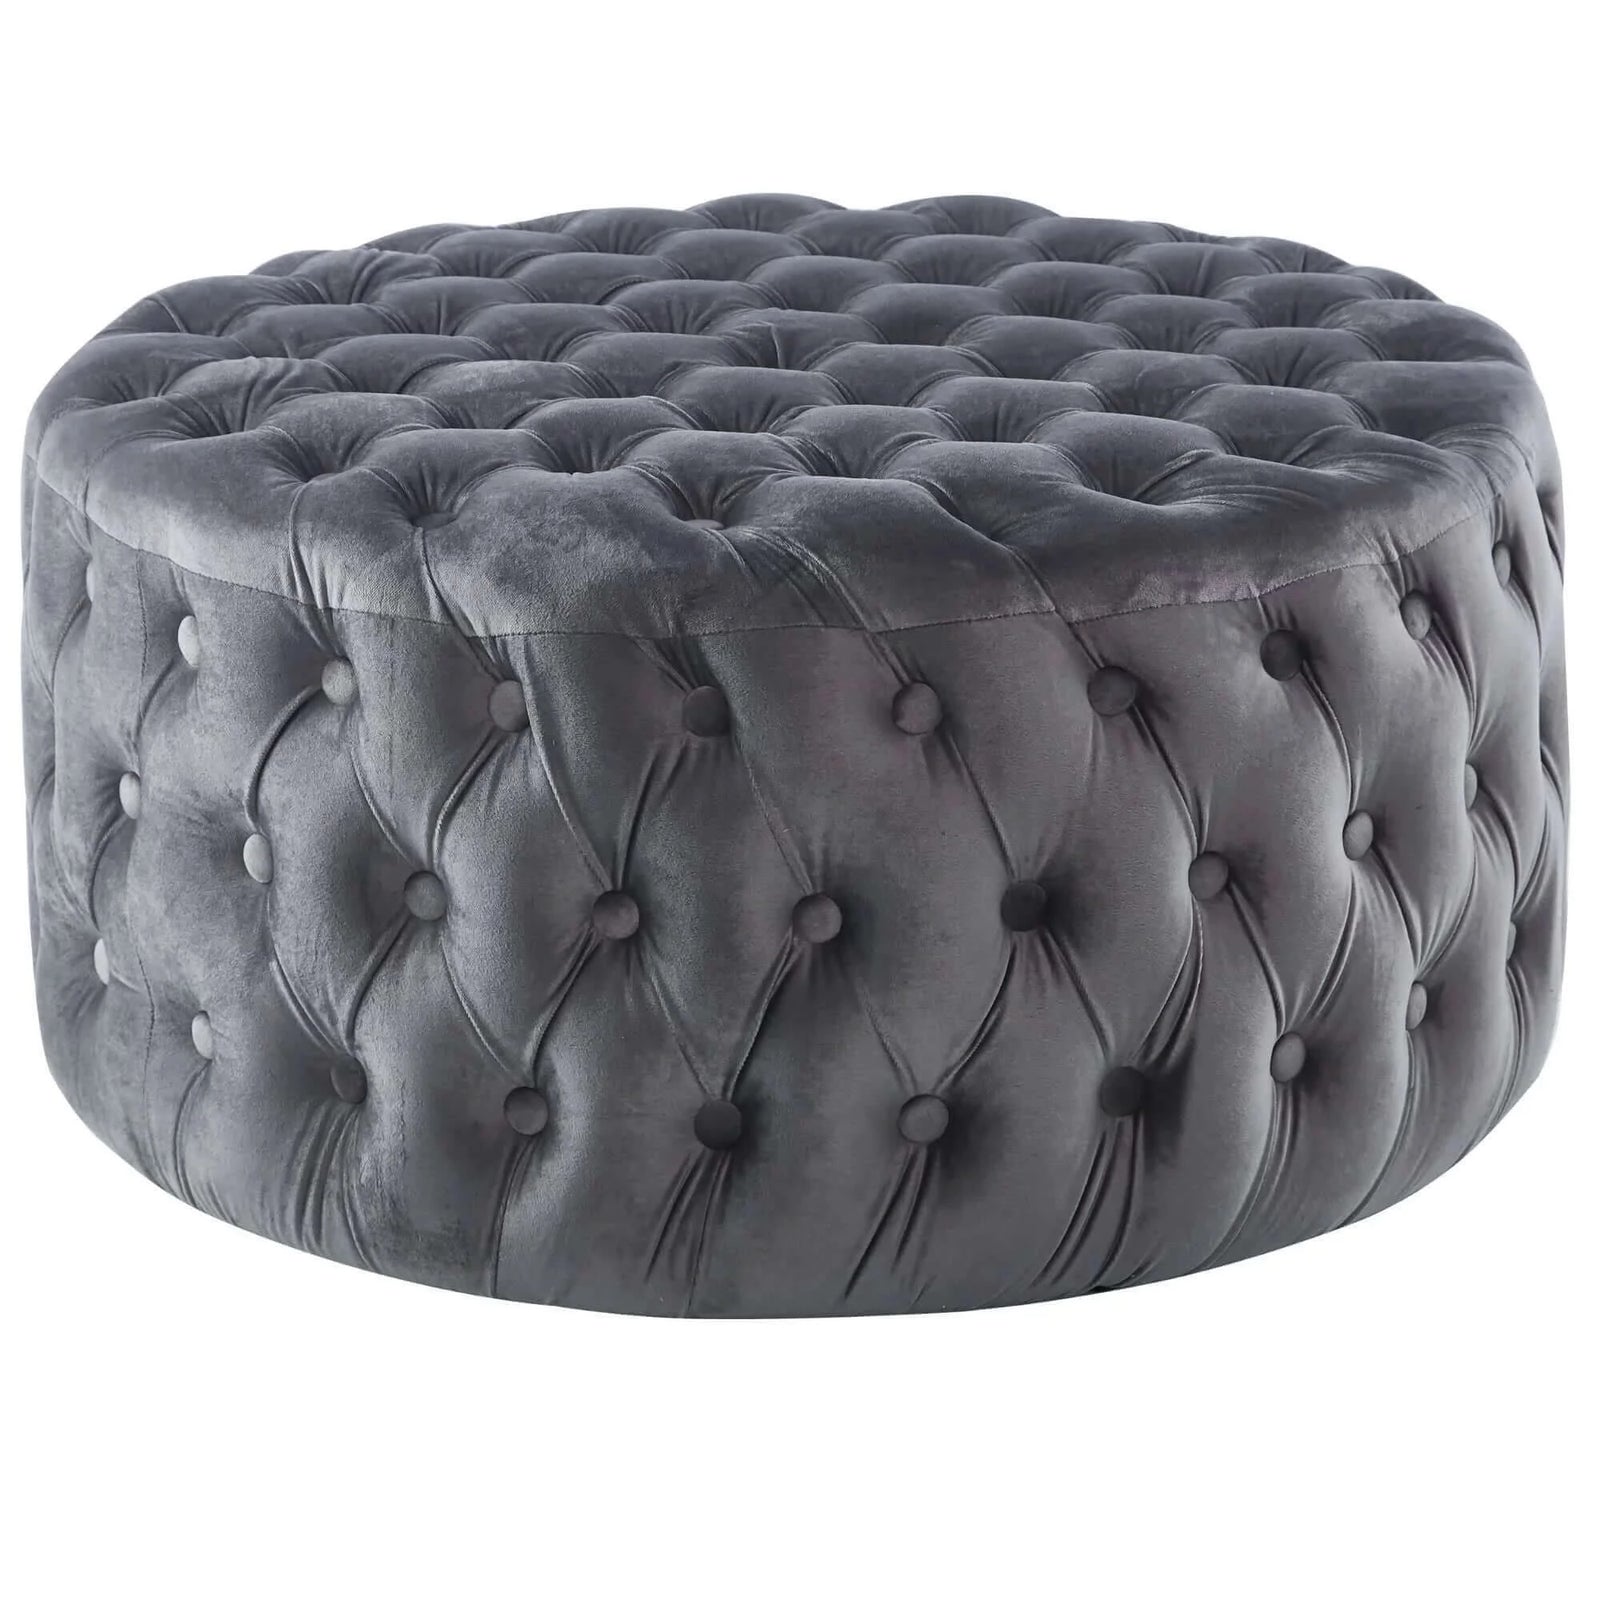 Buy Cosmos Tufted Velvet Fabric Round Ottoman Footstools - Grey in Australia -Upinteriors